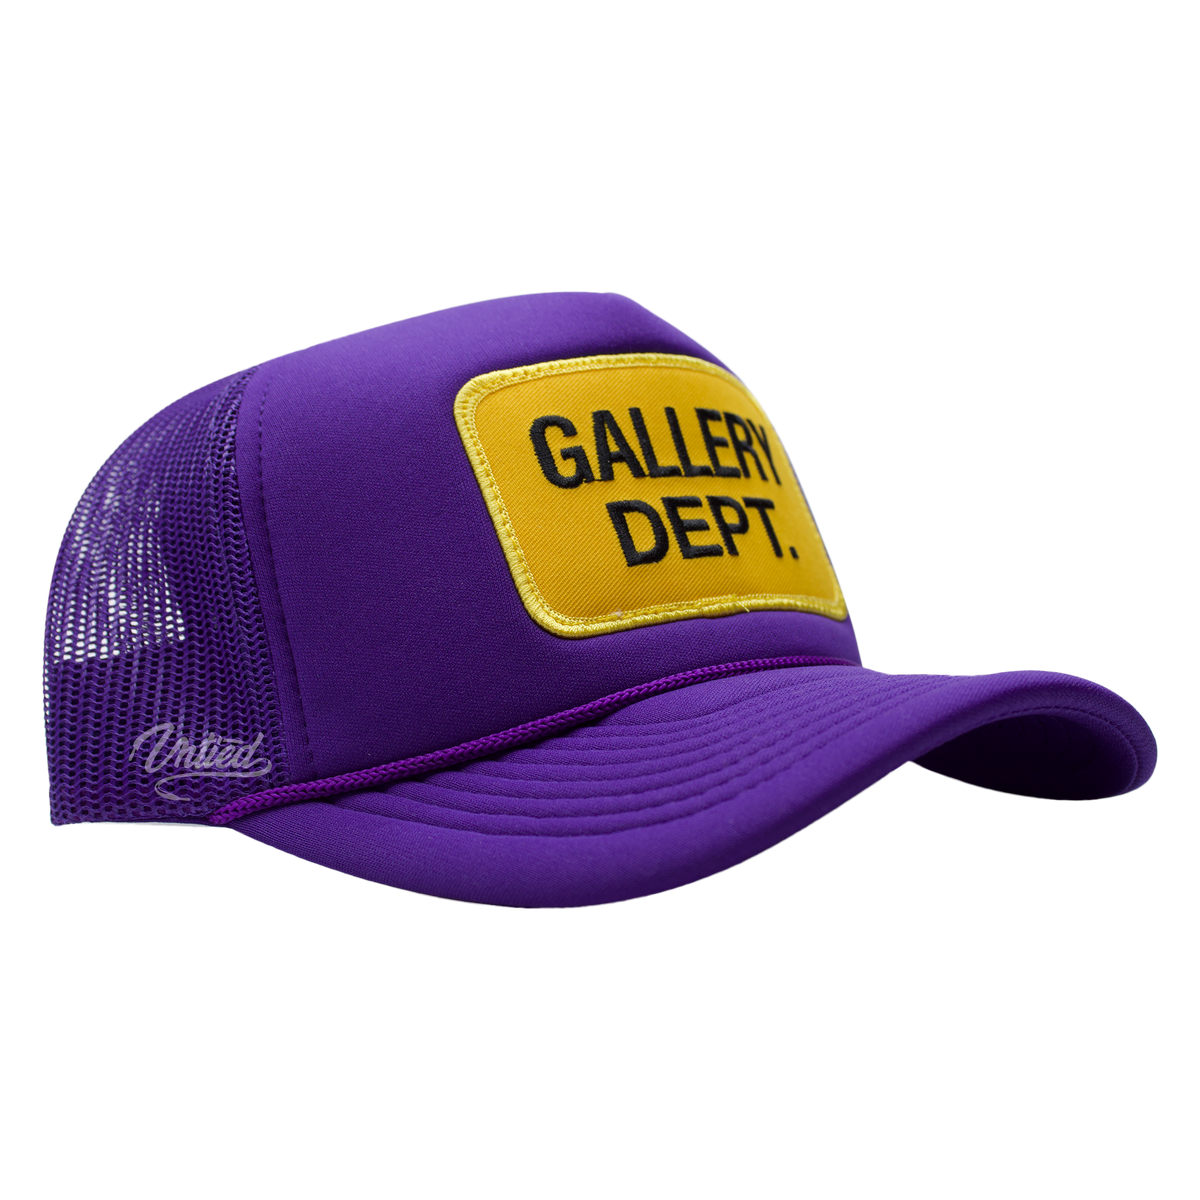 Gallery Dept. Souvenir Trucker Hat "Purple"